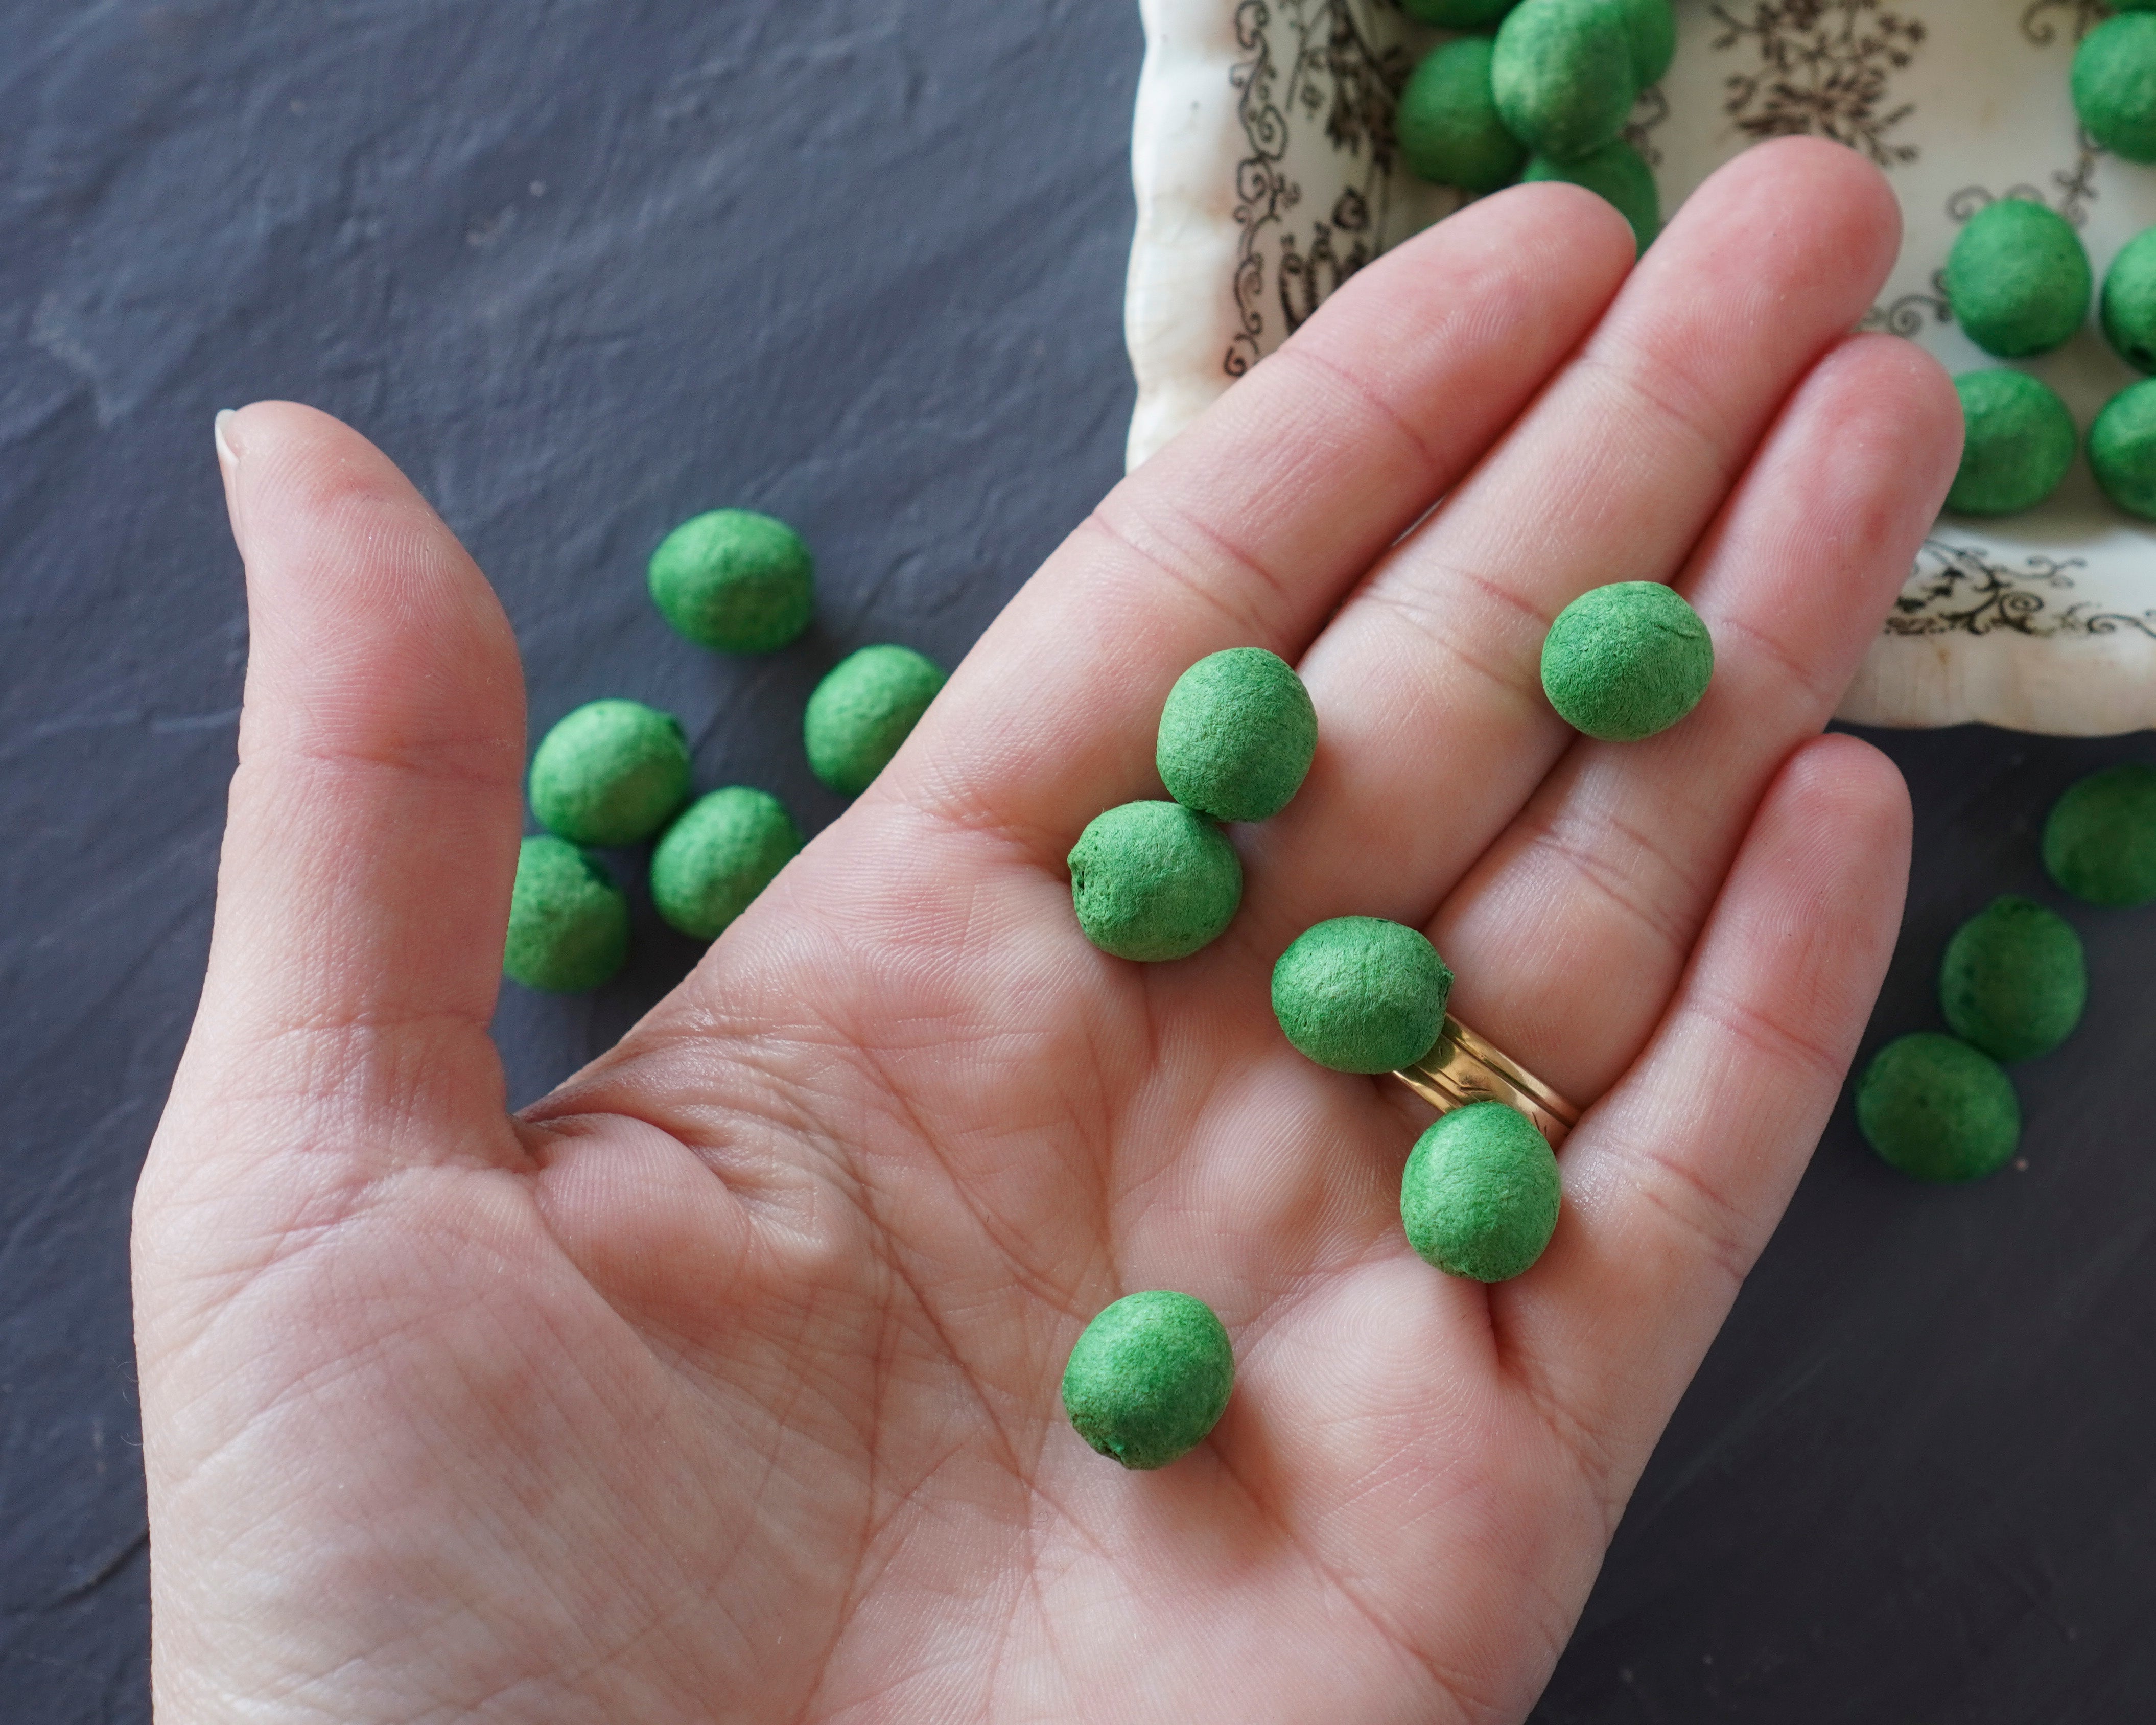 Elf Feet - Christmas Green Tinted Spun Cotton Eggs 12x10mm, 24 Pcs.